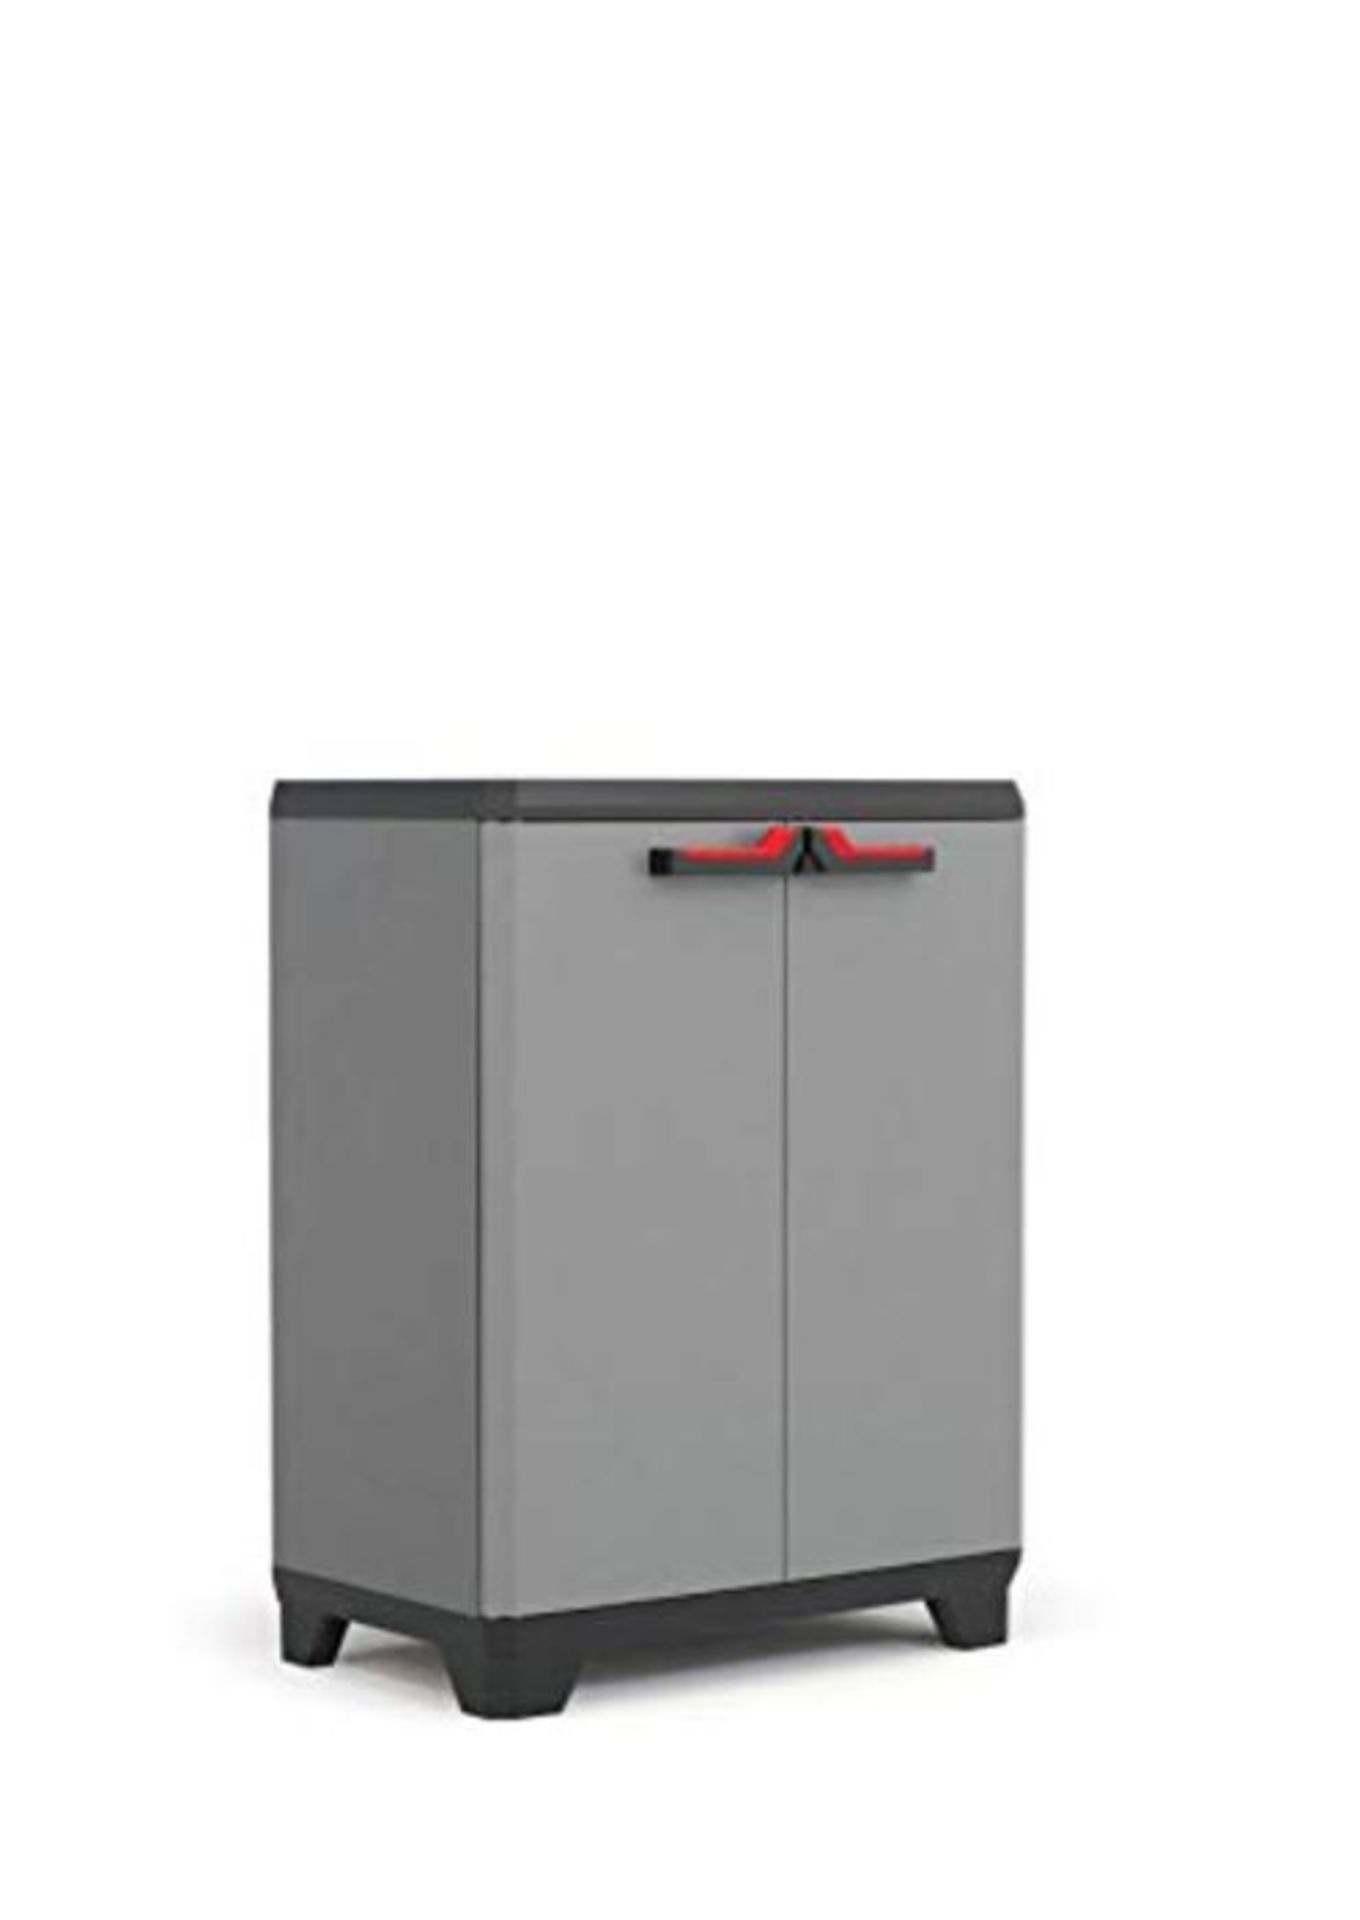 KETER Low cabinet Stilo, EPACK, Gray / Black / Red